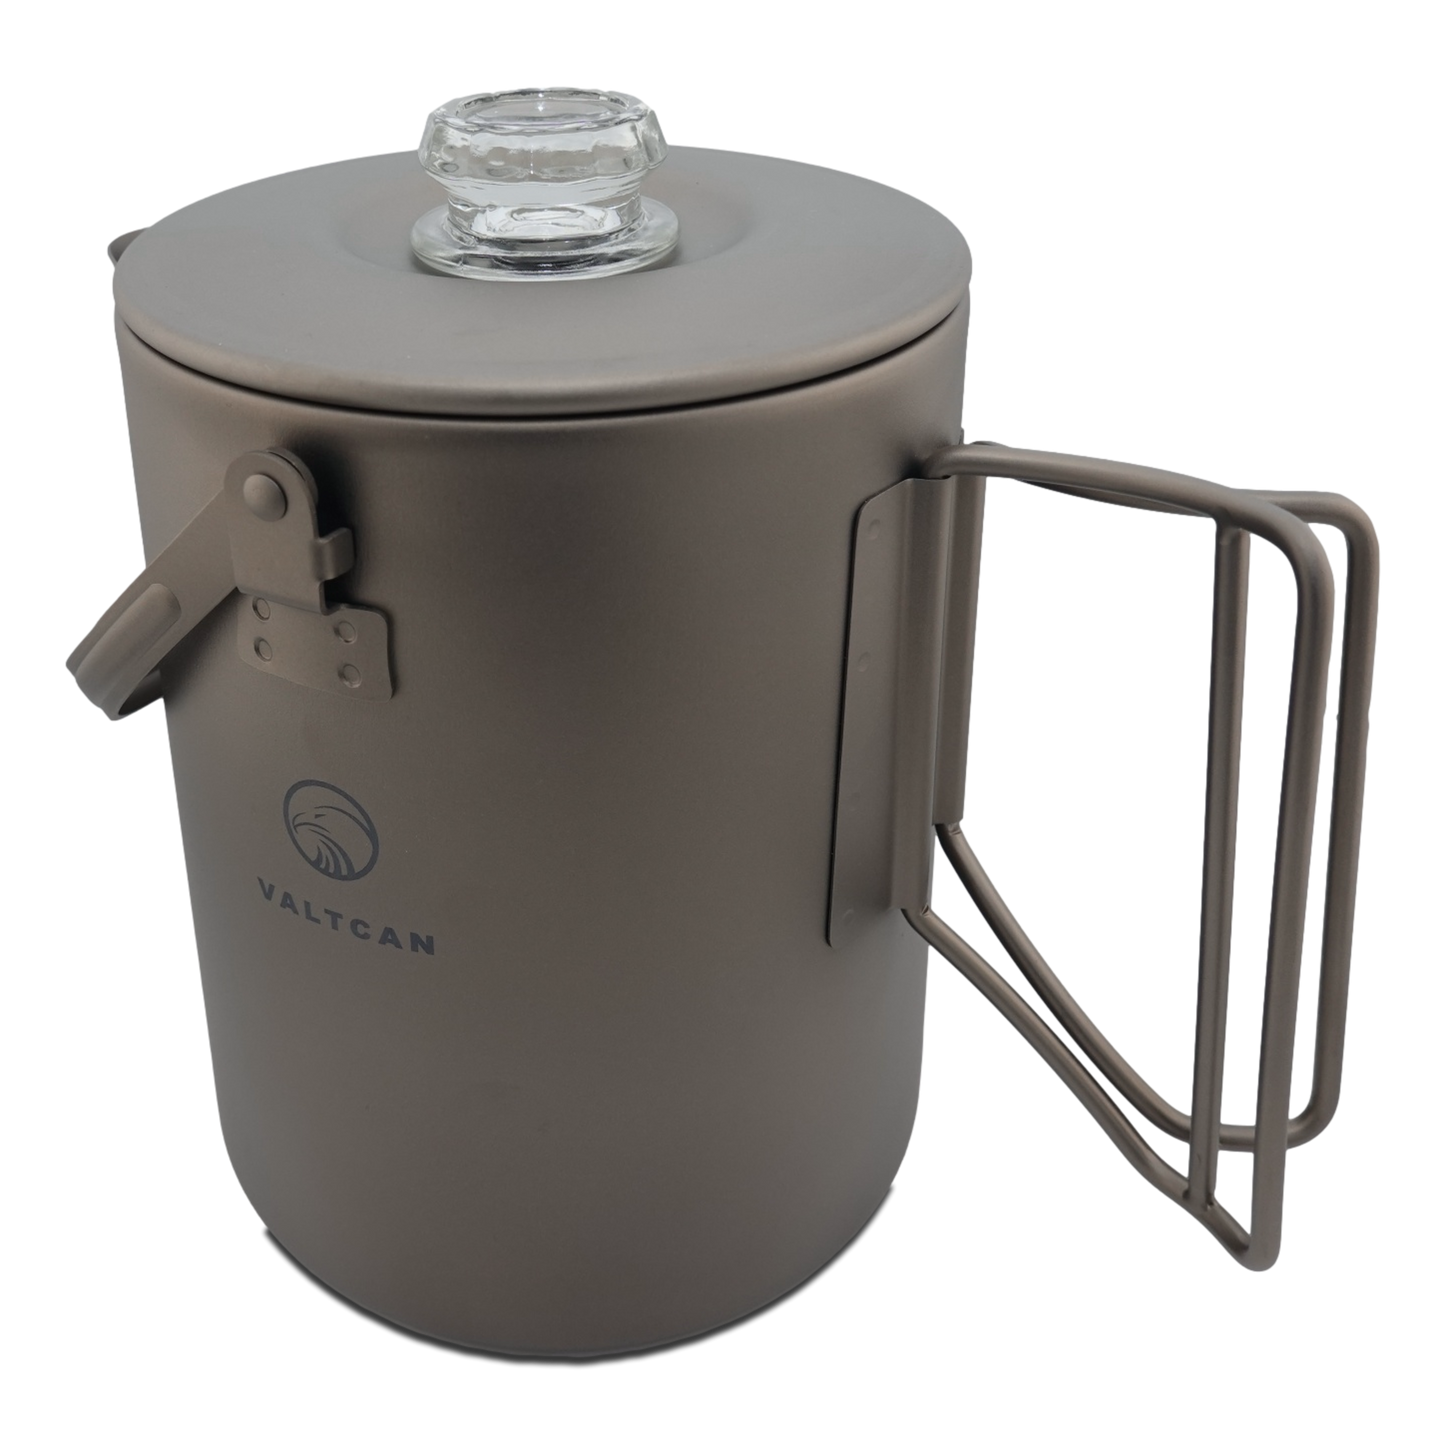 Valtcan Titanium Percolator Coffee Maker Pot 1.5L Filter Brew Ultralight Weight Kettle Camping Kettle 50.7 oz Capacity  395g